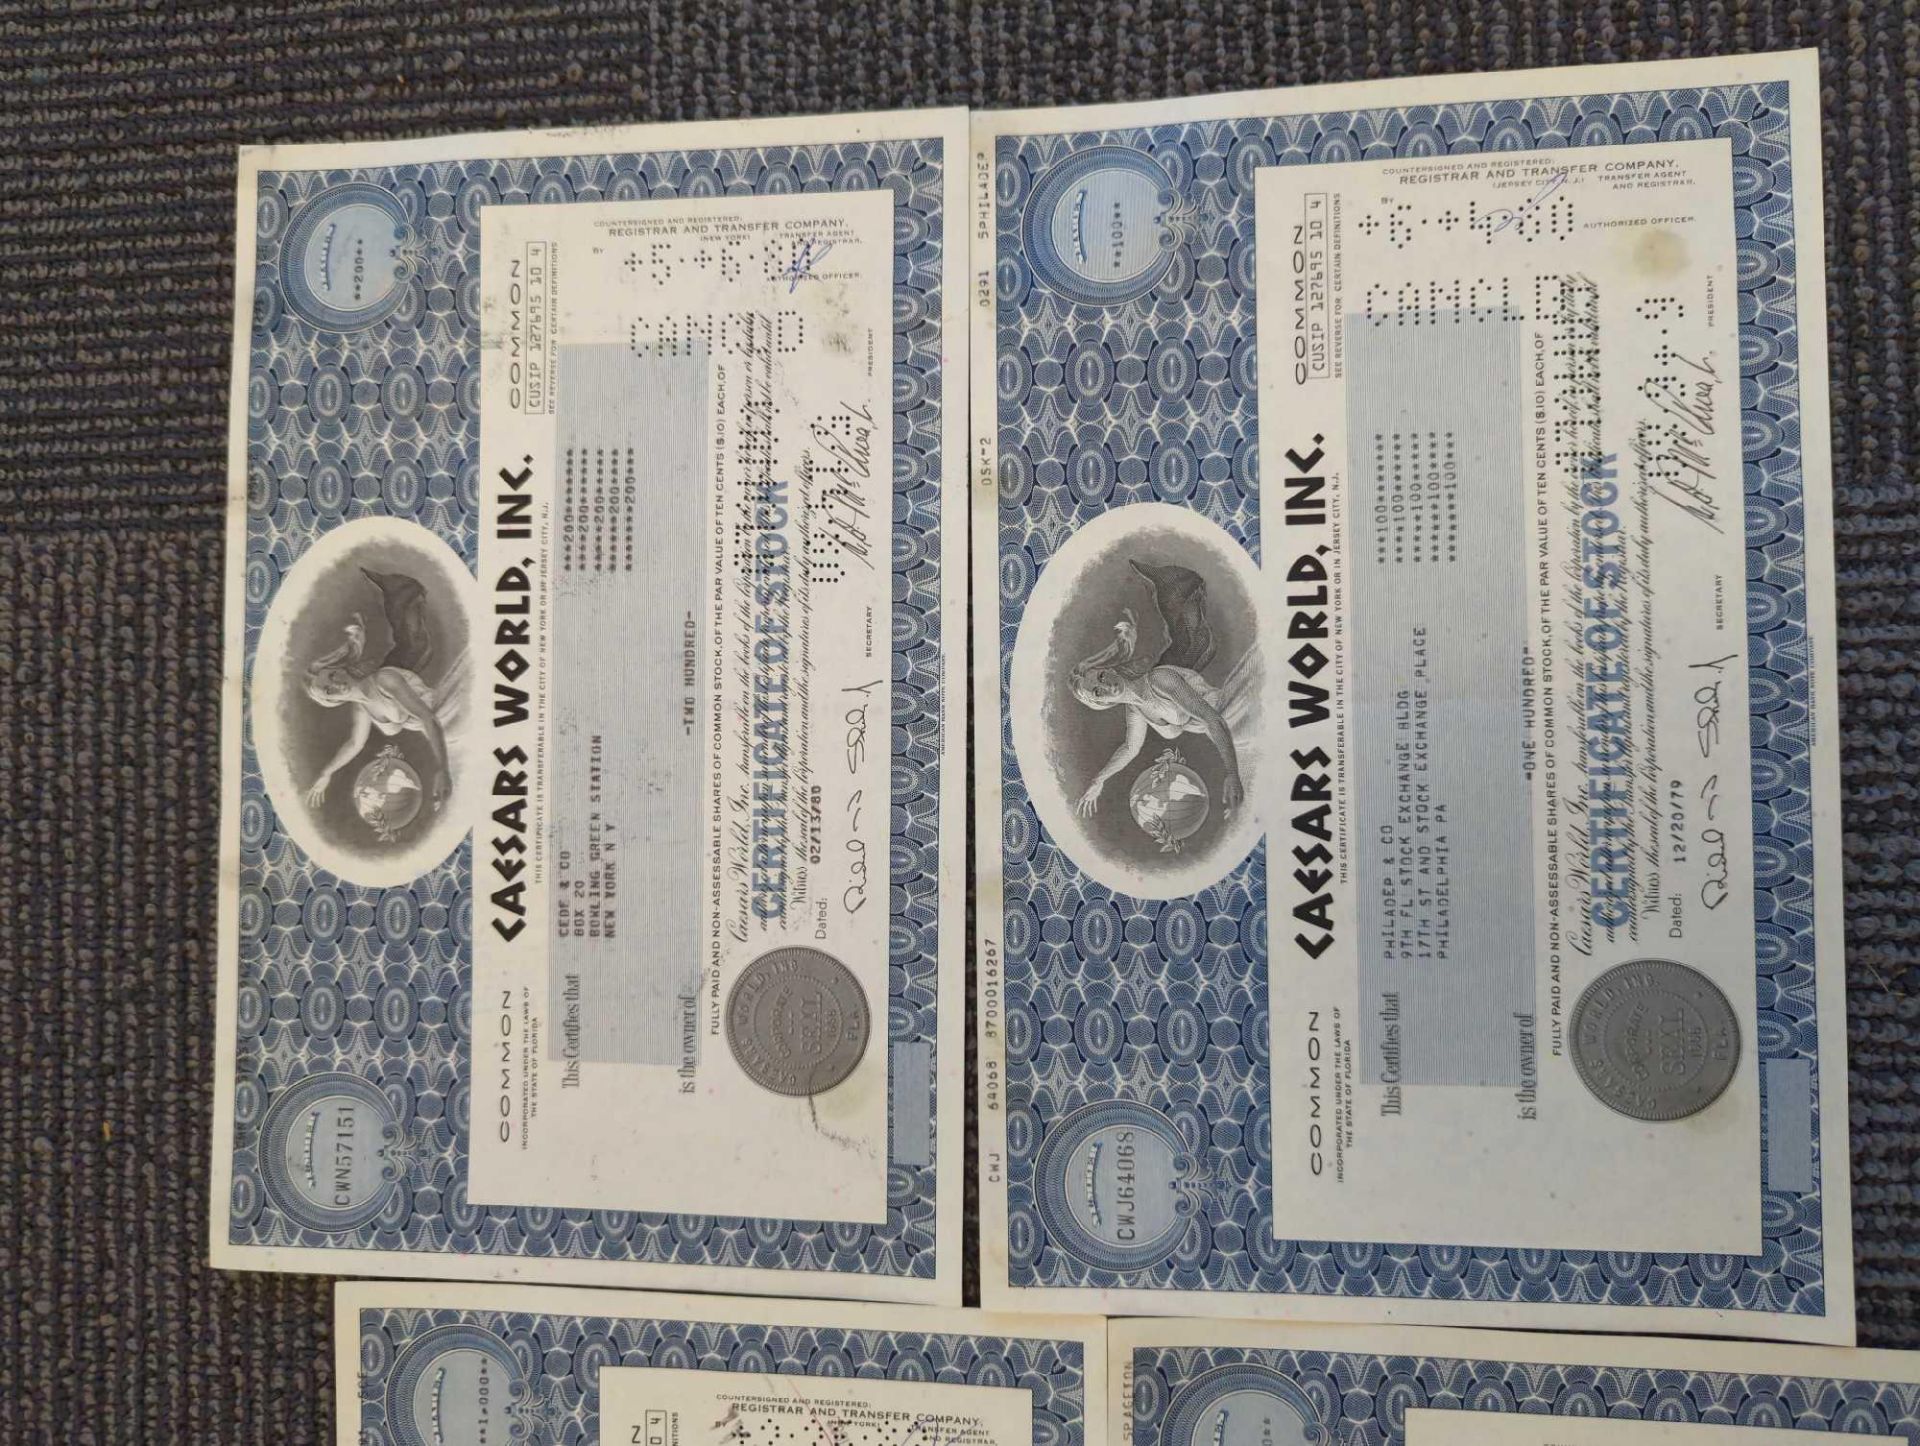 4 Caesars World Inc Stock Certificates - Image 2 of 4